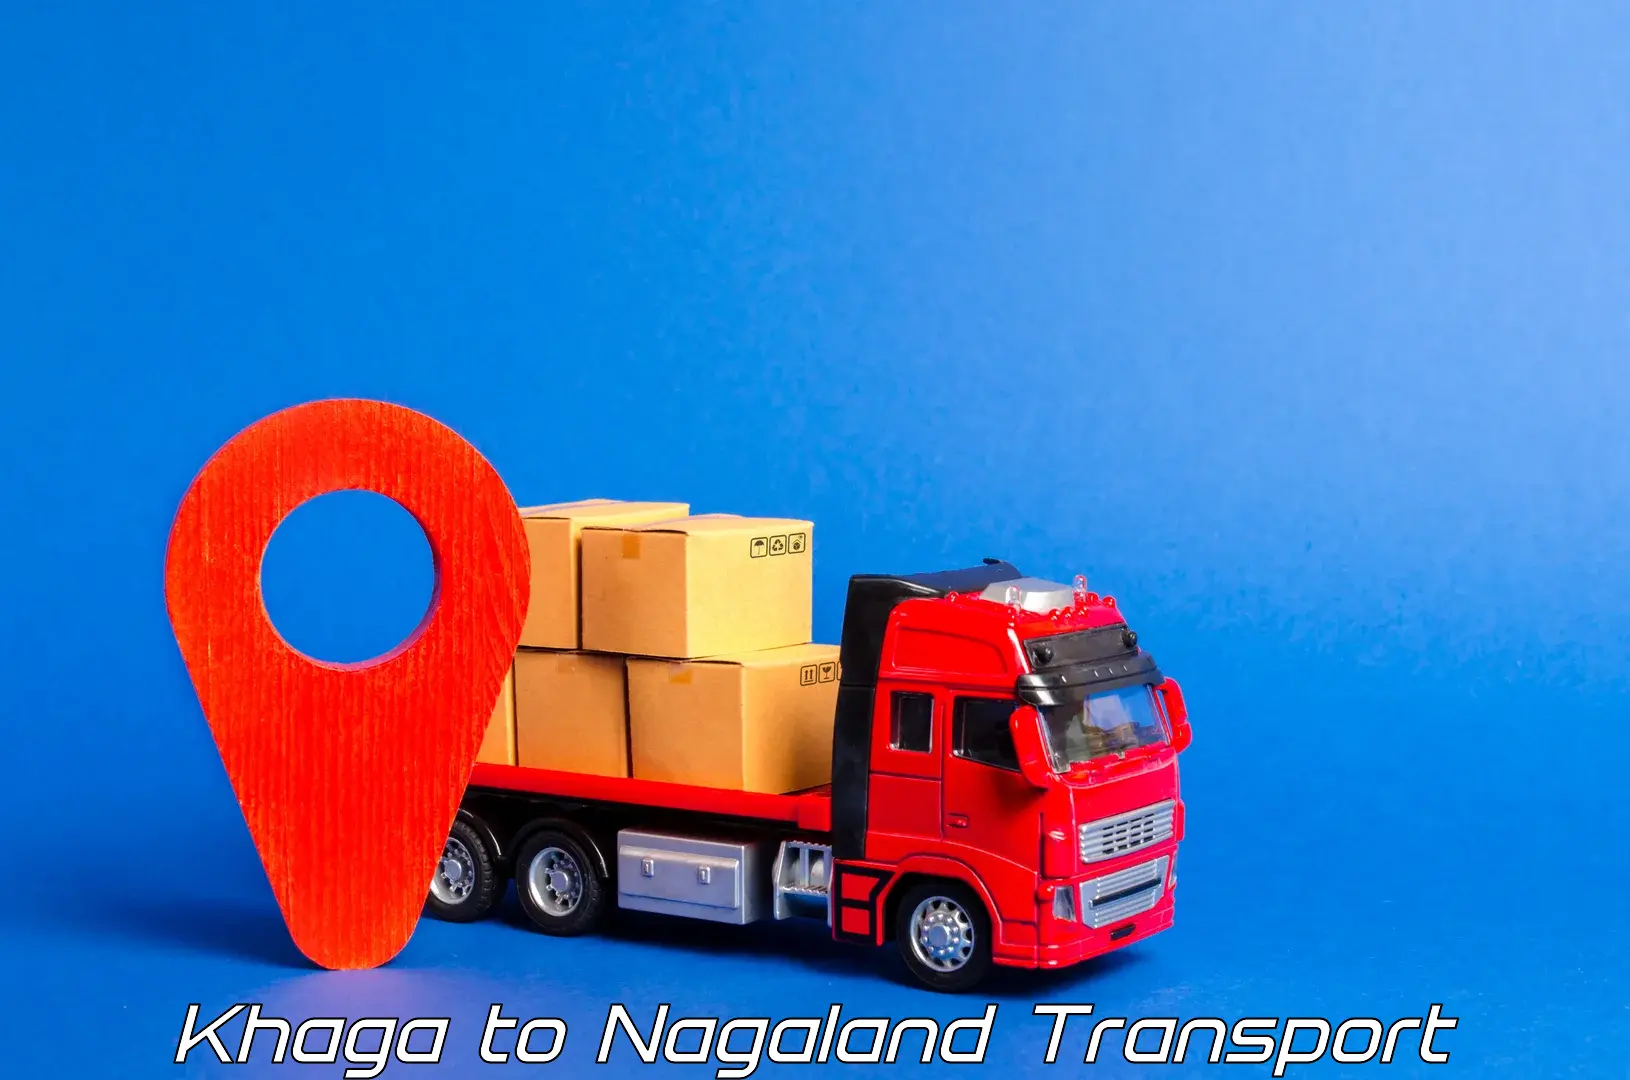 Sending bike to another city Khaga to Nagaland